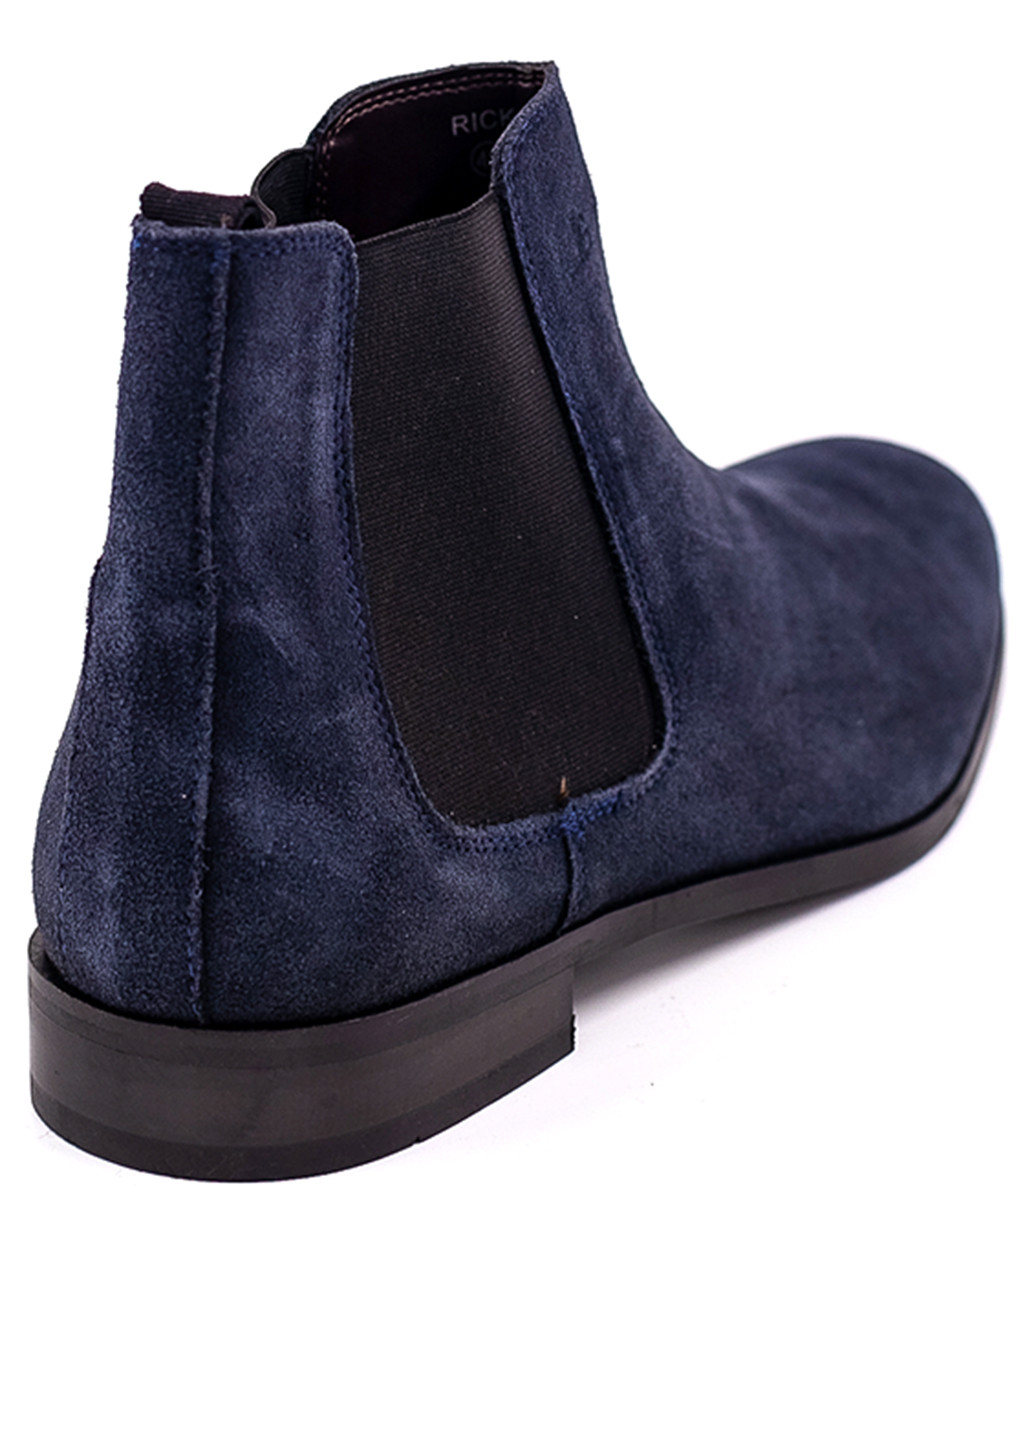 Темно-синие осенние ботинки челси Jean-Louis Scherrer